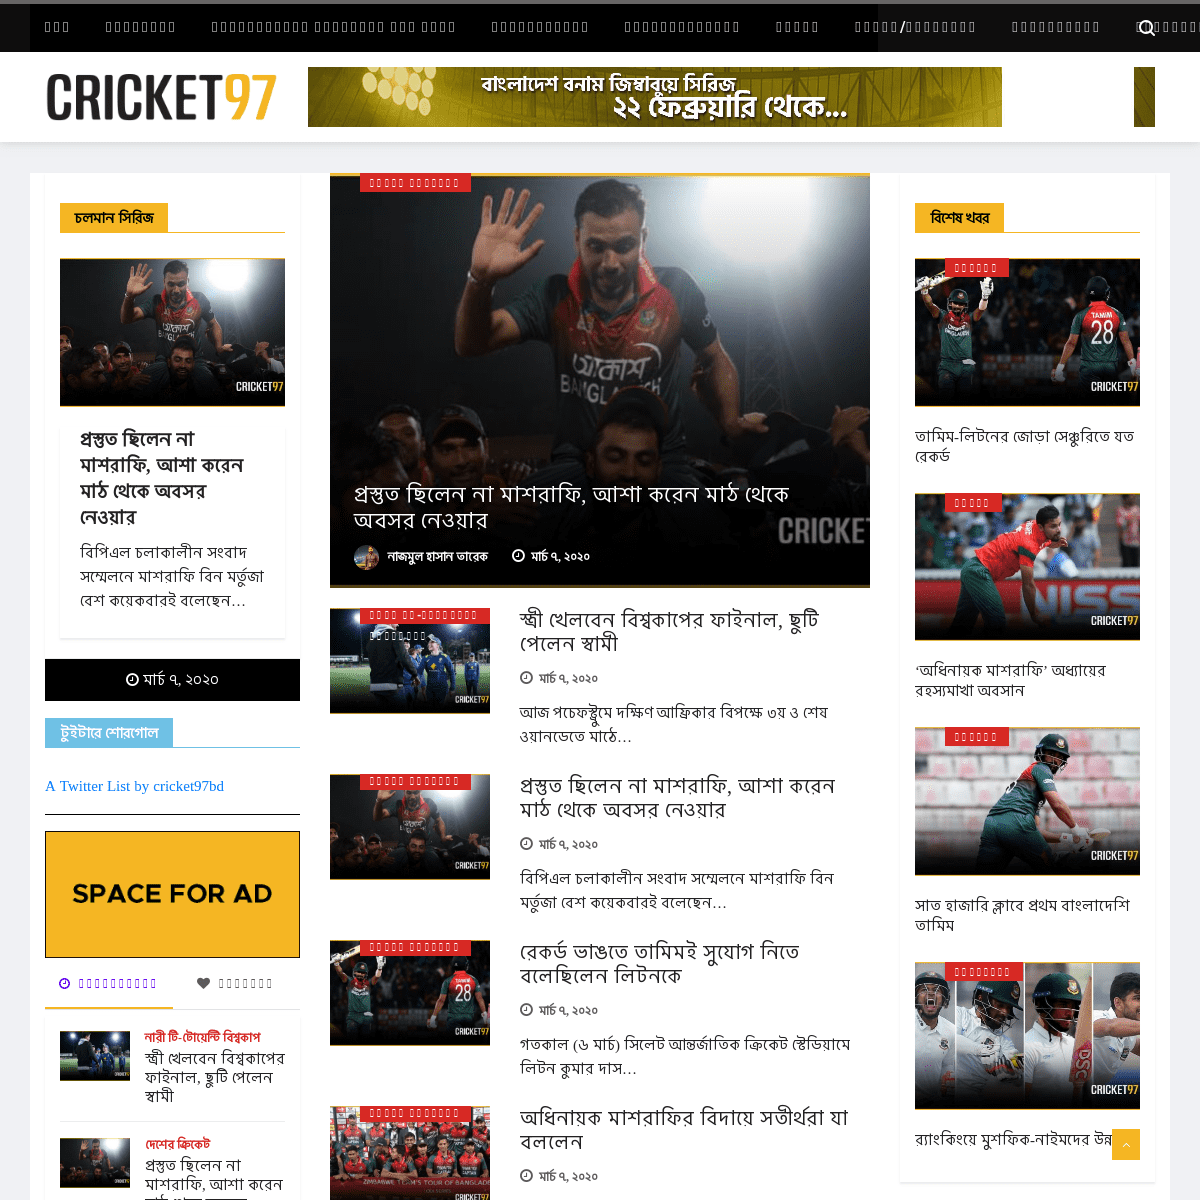 A complete backup of cricket97.com